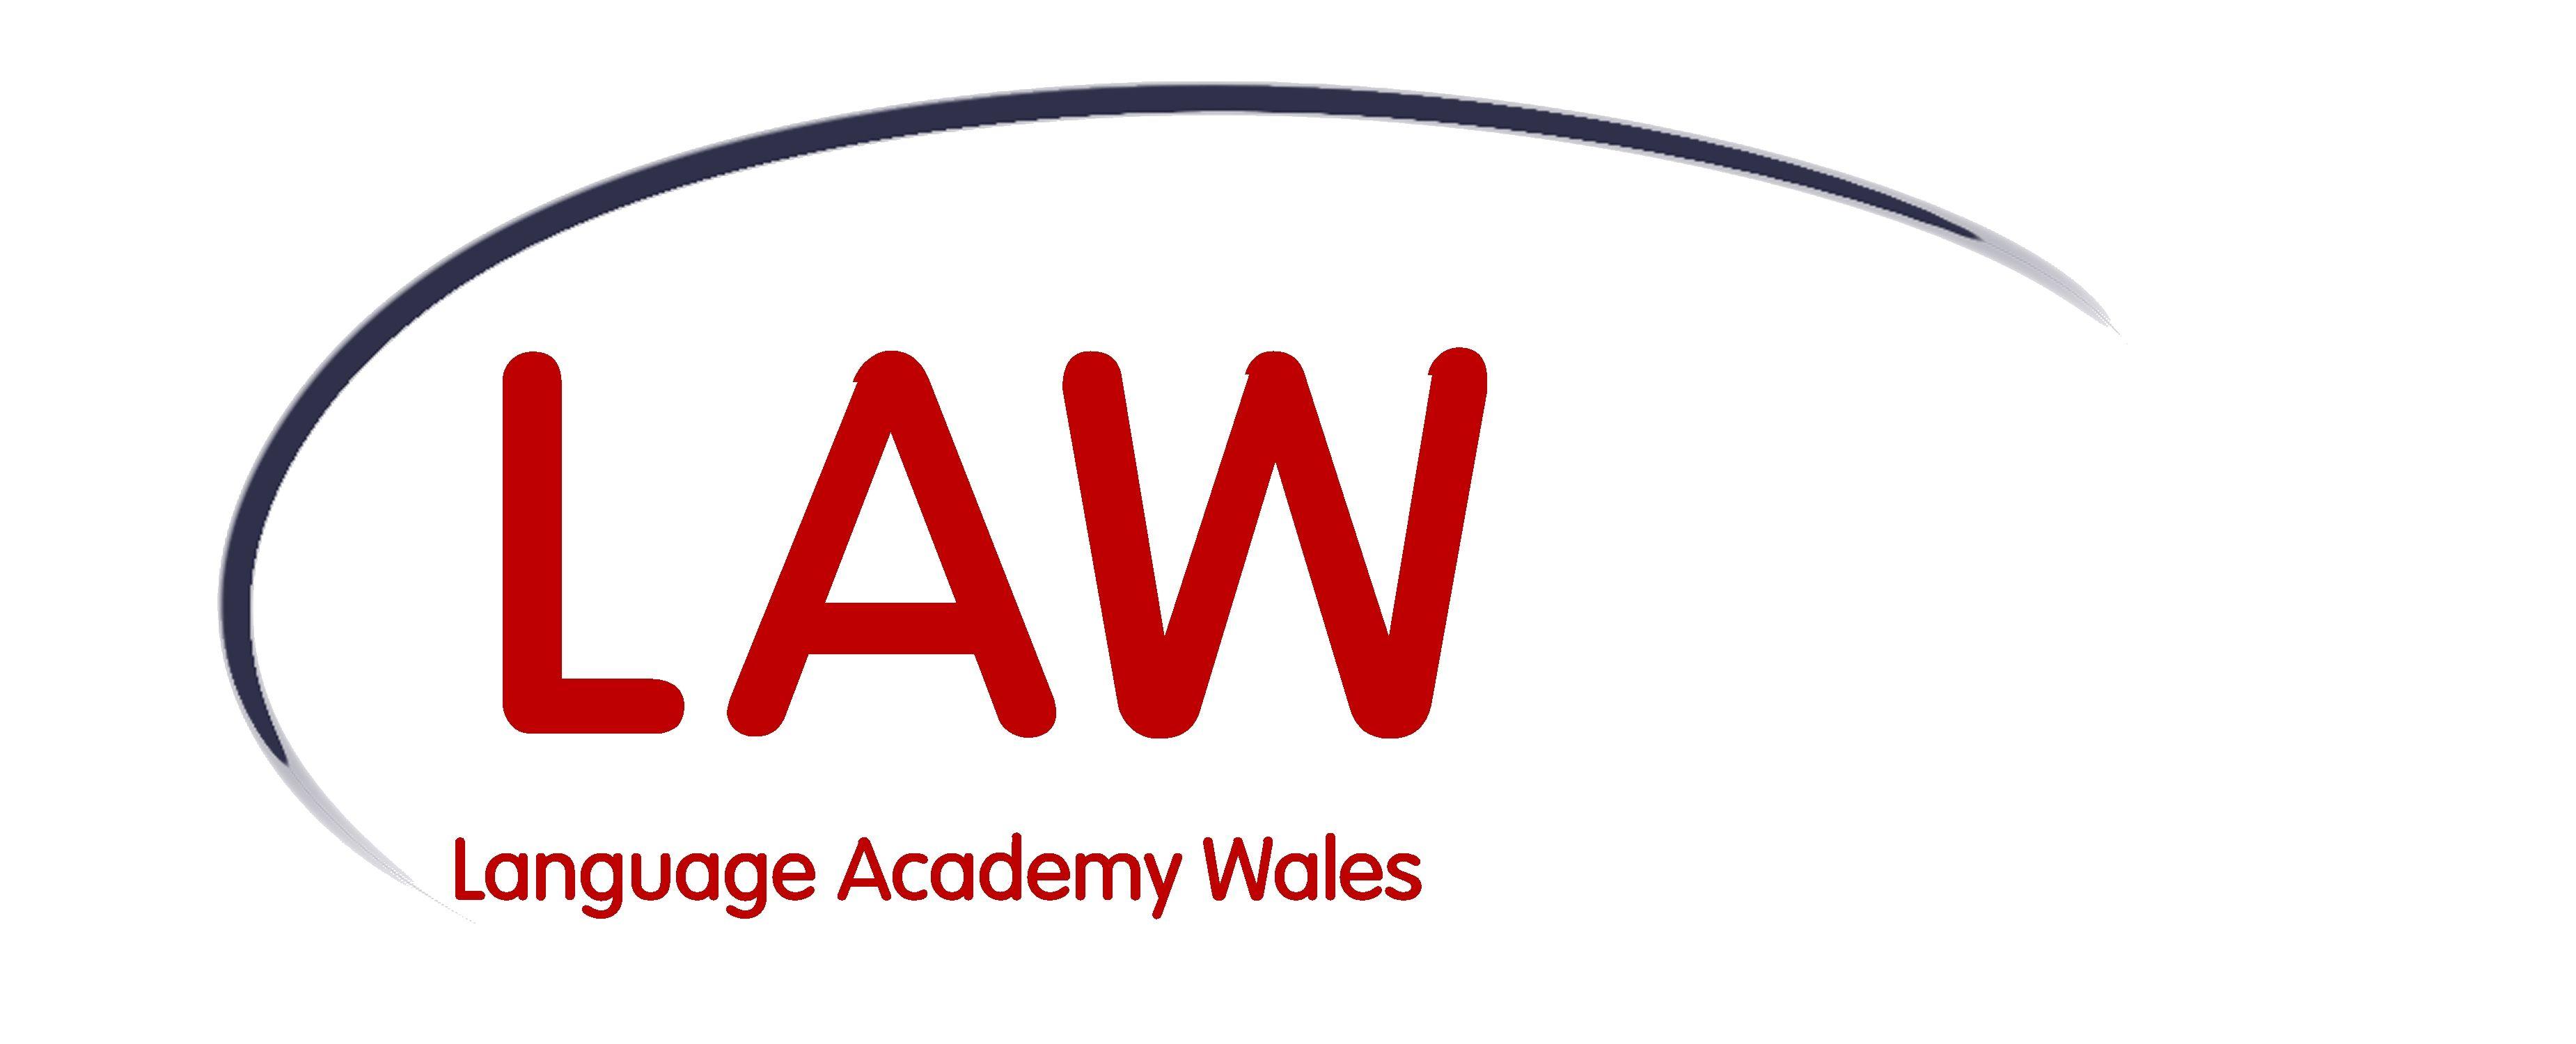 Red Law Logo - LAW LOGO - Language Academy Wales